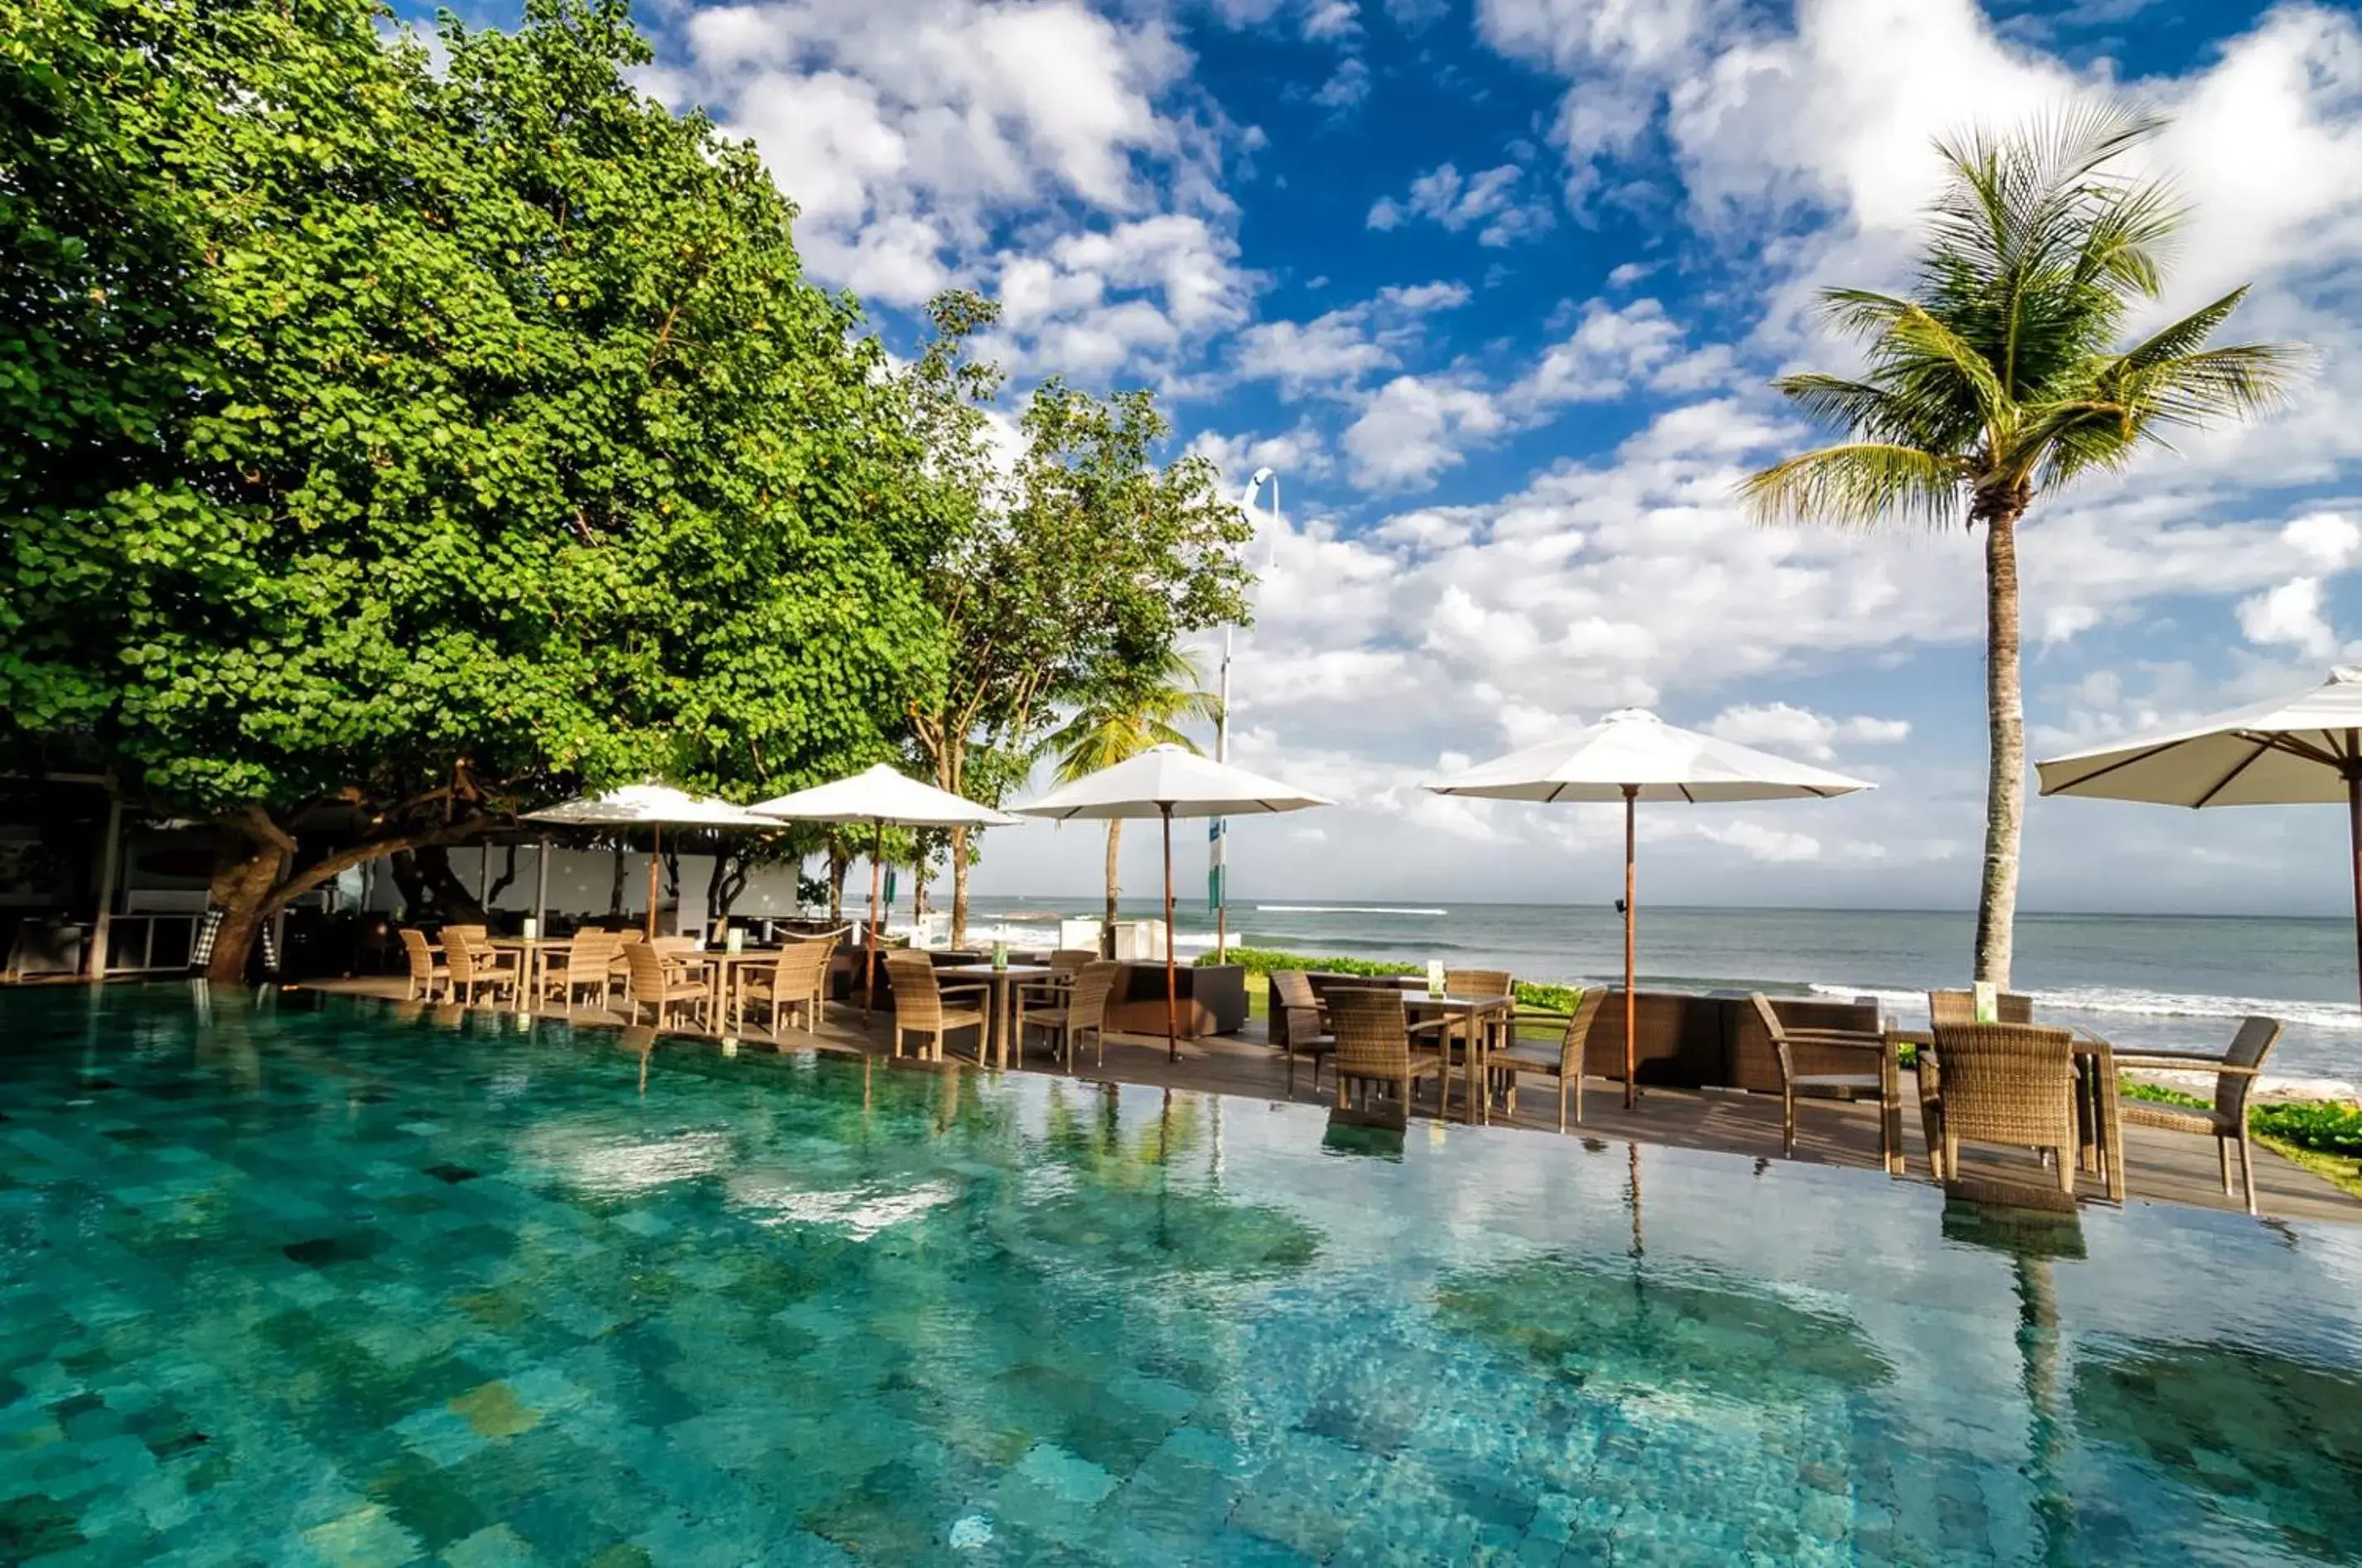 Aqua park, Swimming Pool in Bali Garden Beach Resort